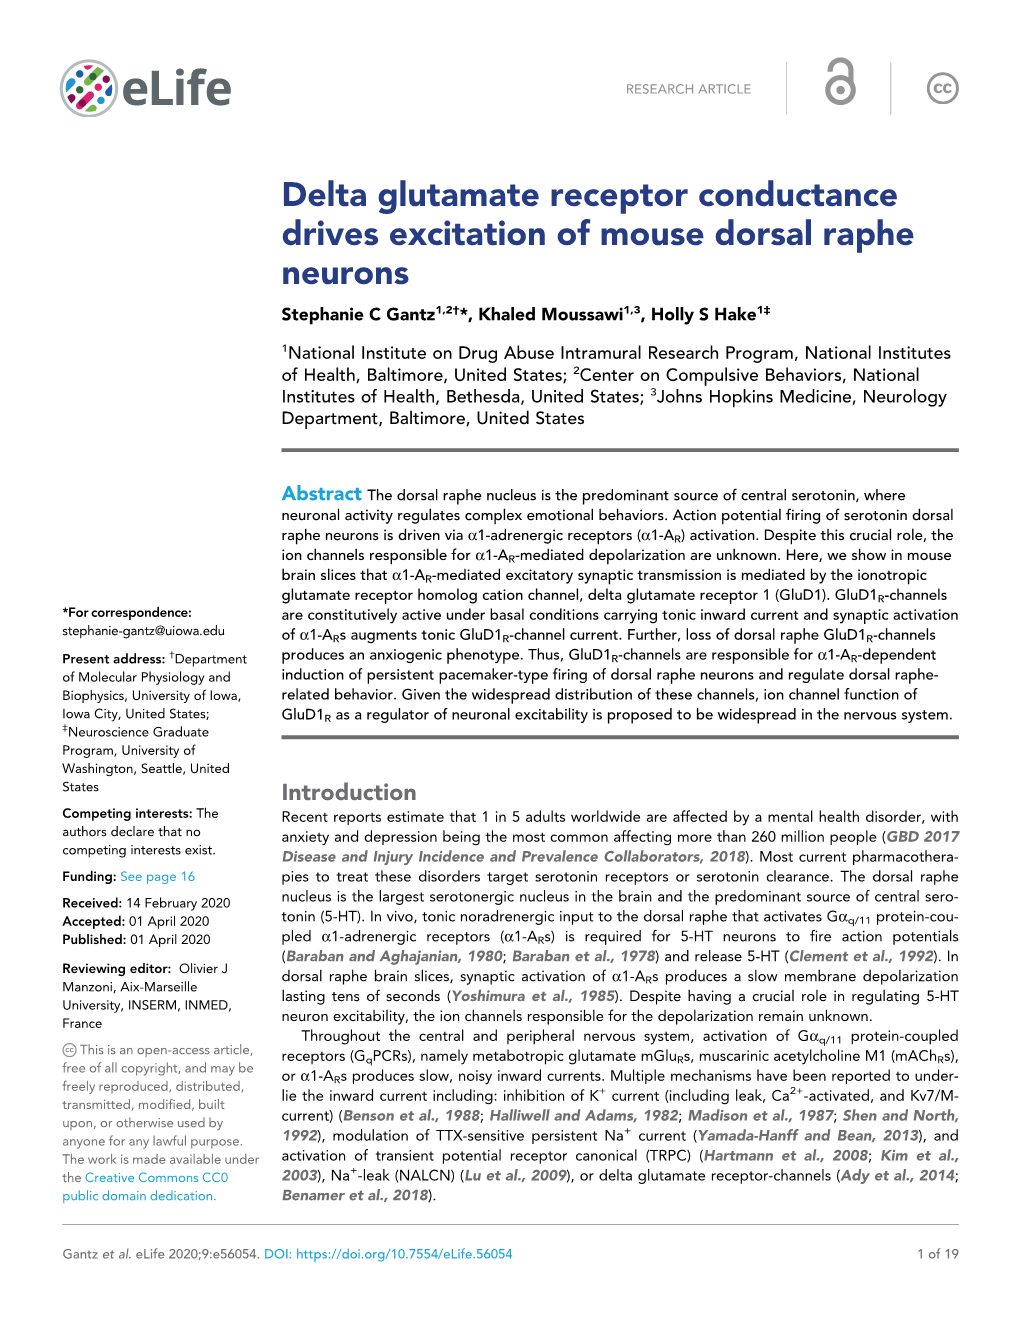 Delta Glutamate Receptor Conductance Drives Excitation of Mouse Dorsal Raphe Neurons Stephanie C Gantz1,2†*, Khaled Moussawi1,3, Holly S Hake1‡